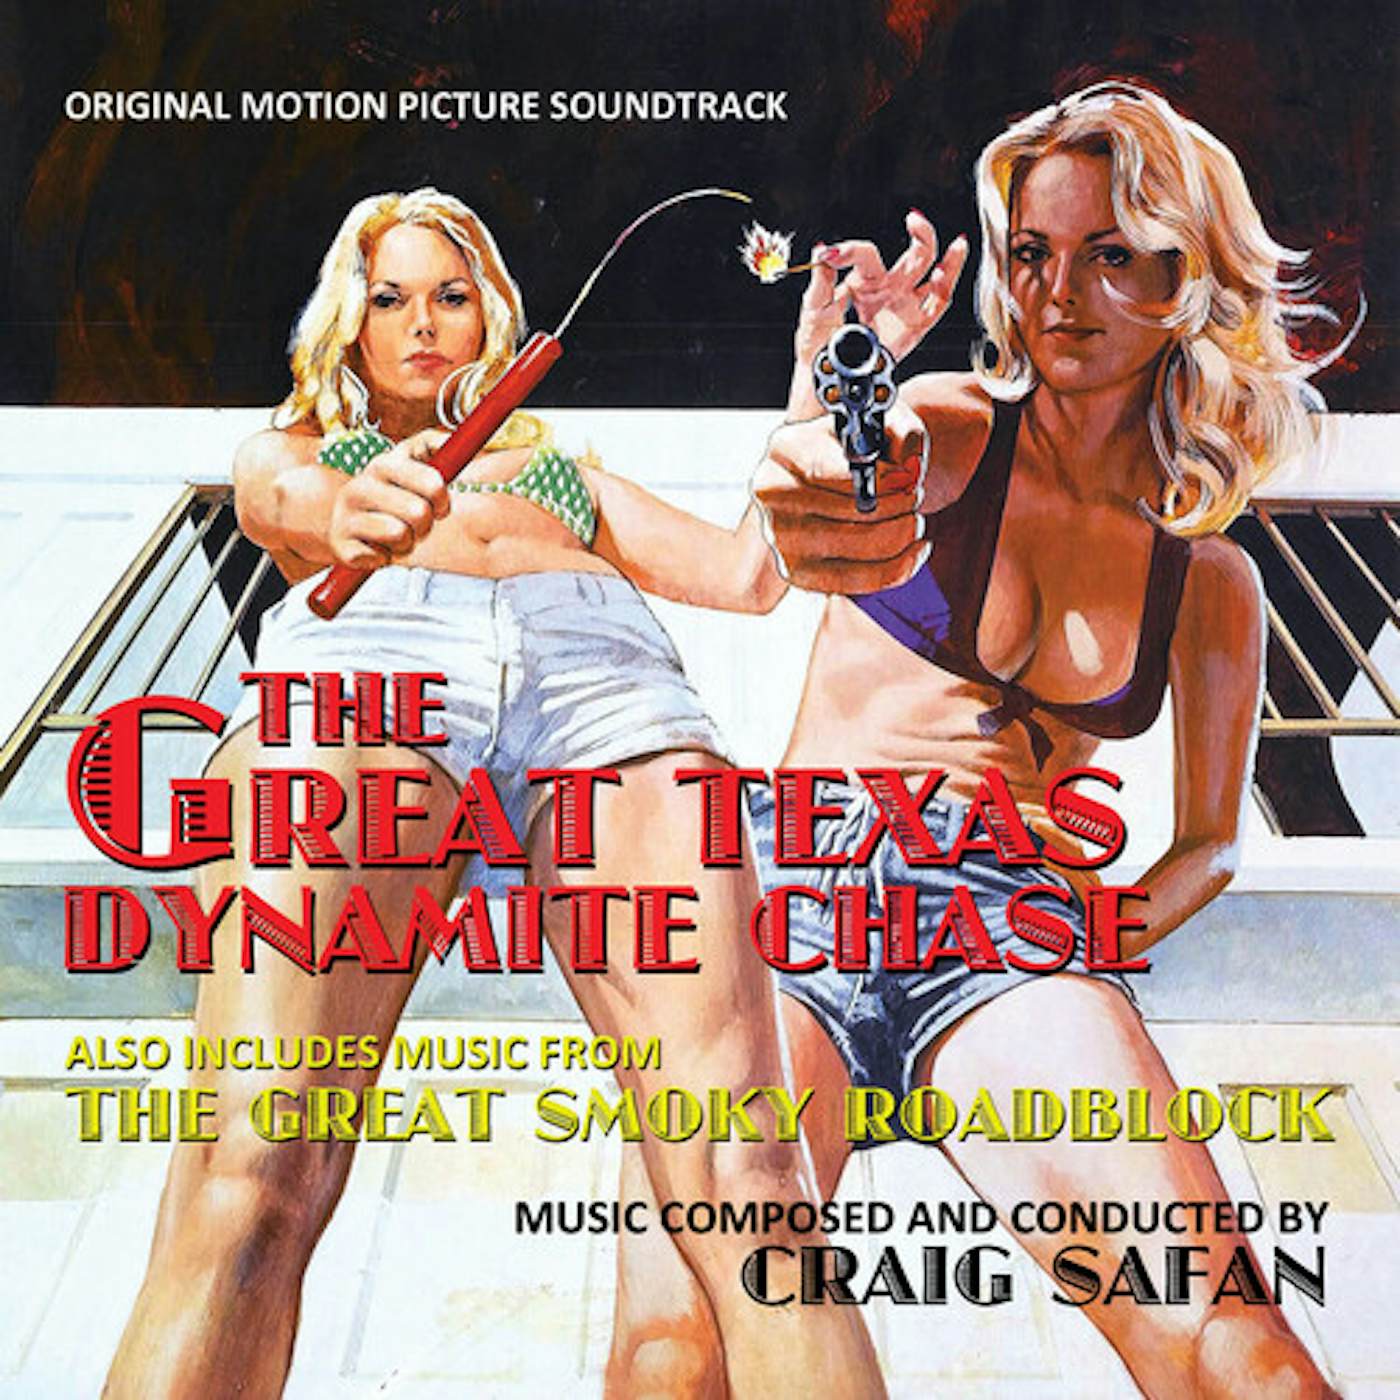 Craig Safan GREAT TEXAS DYNAMITE CHASE CD